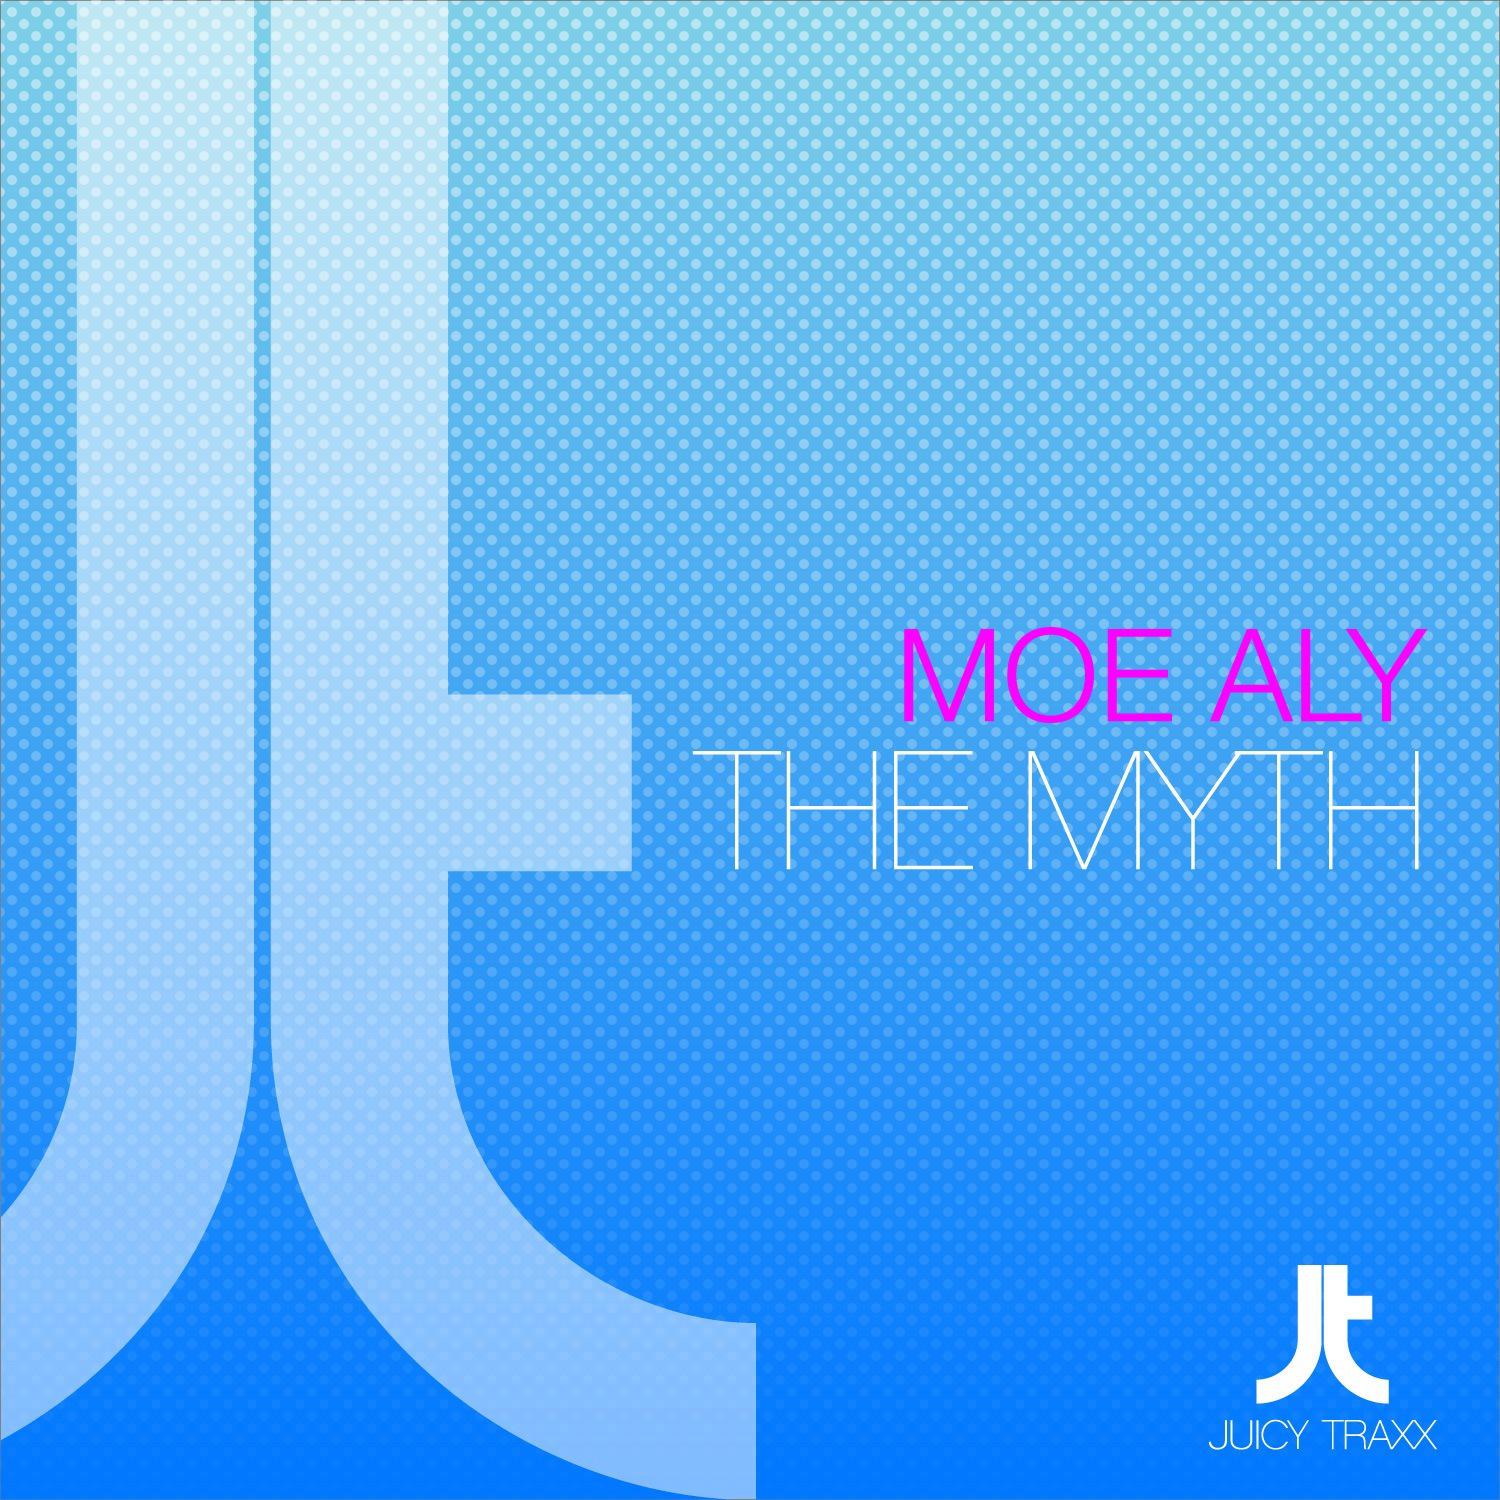 Moe Aly - The Myth